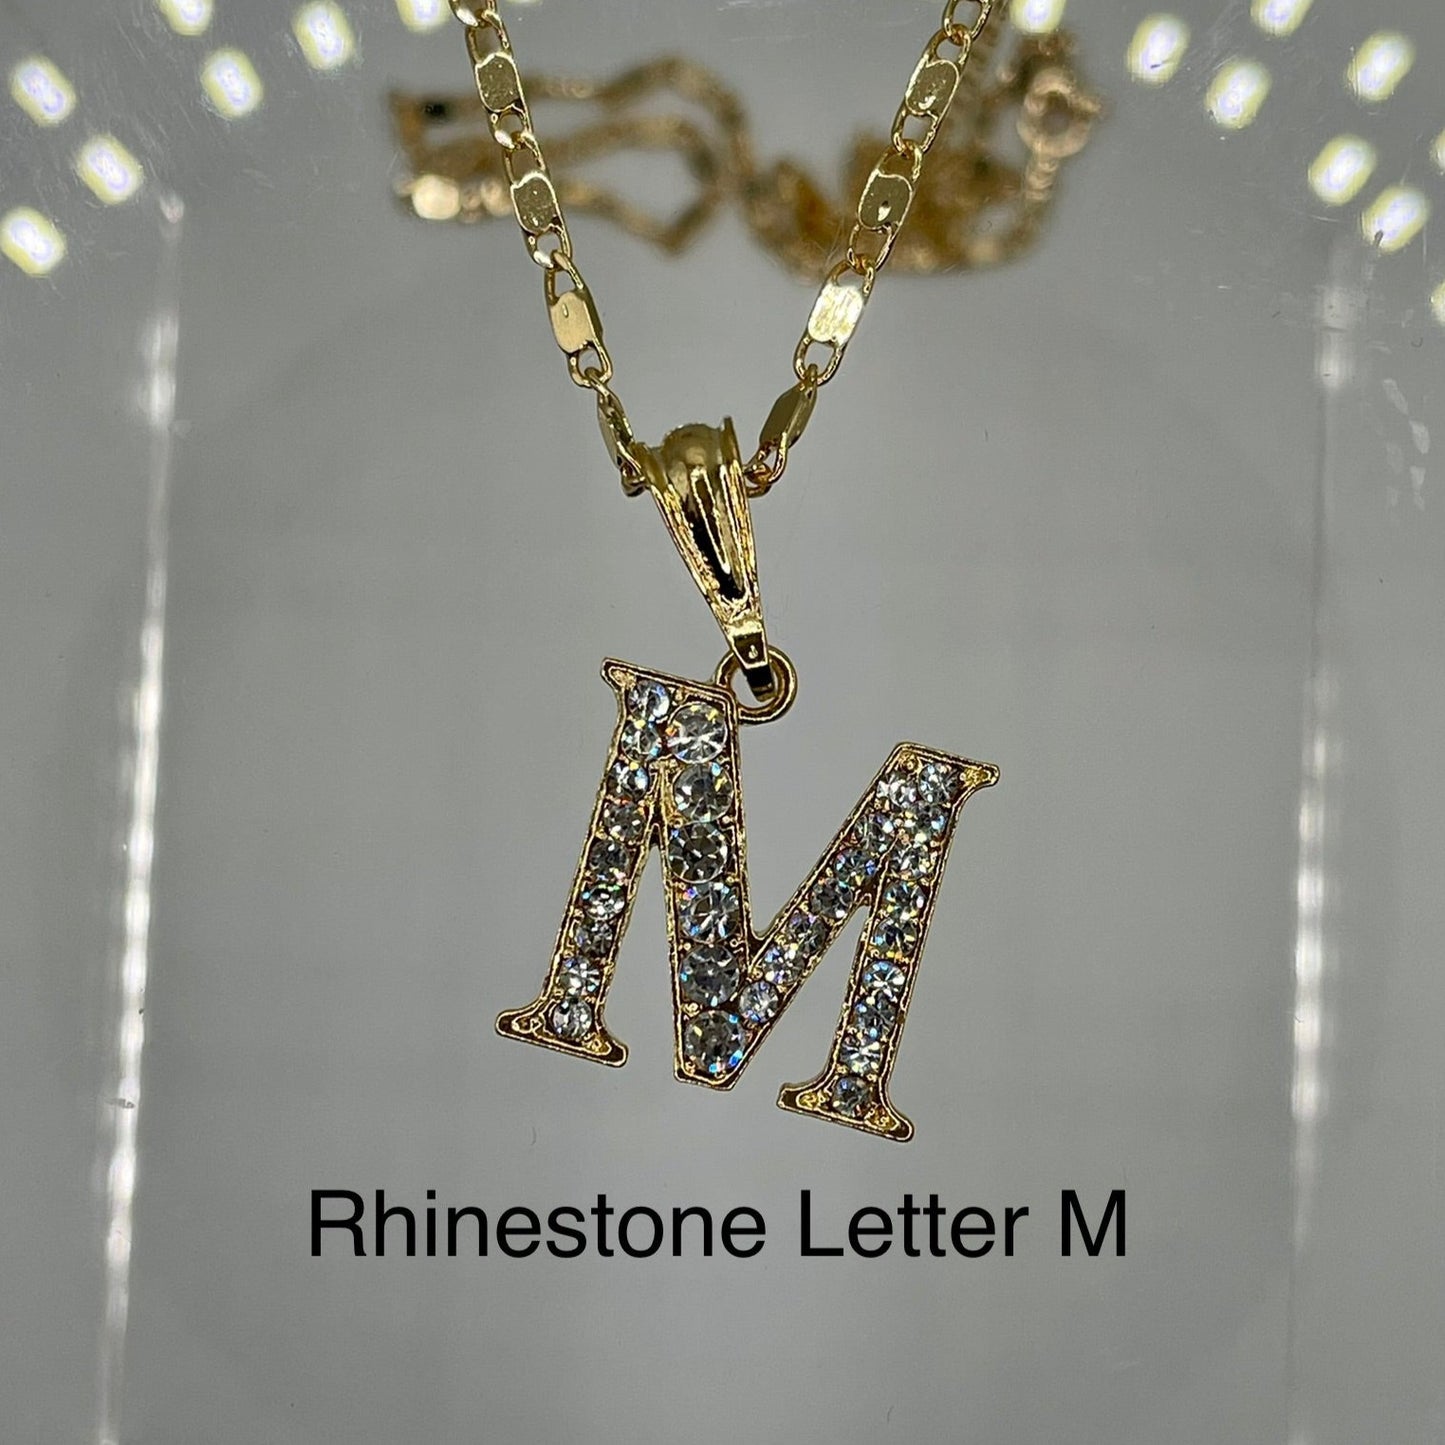 Rhinestone letter M pendant 14k gold plated on gold plated cute necklace. Letter pendants.